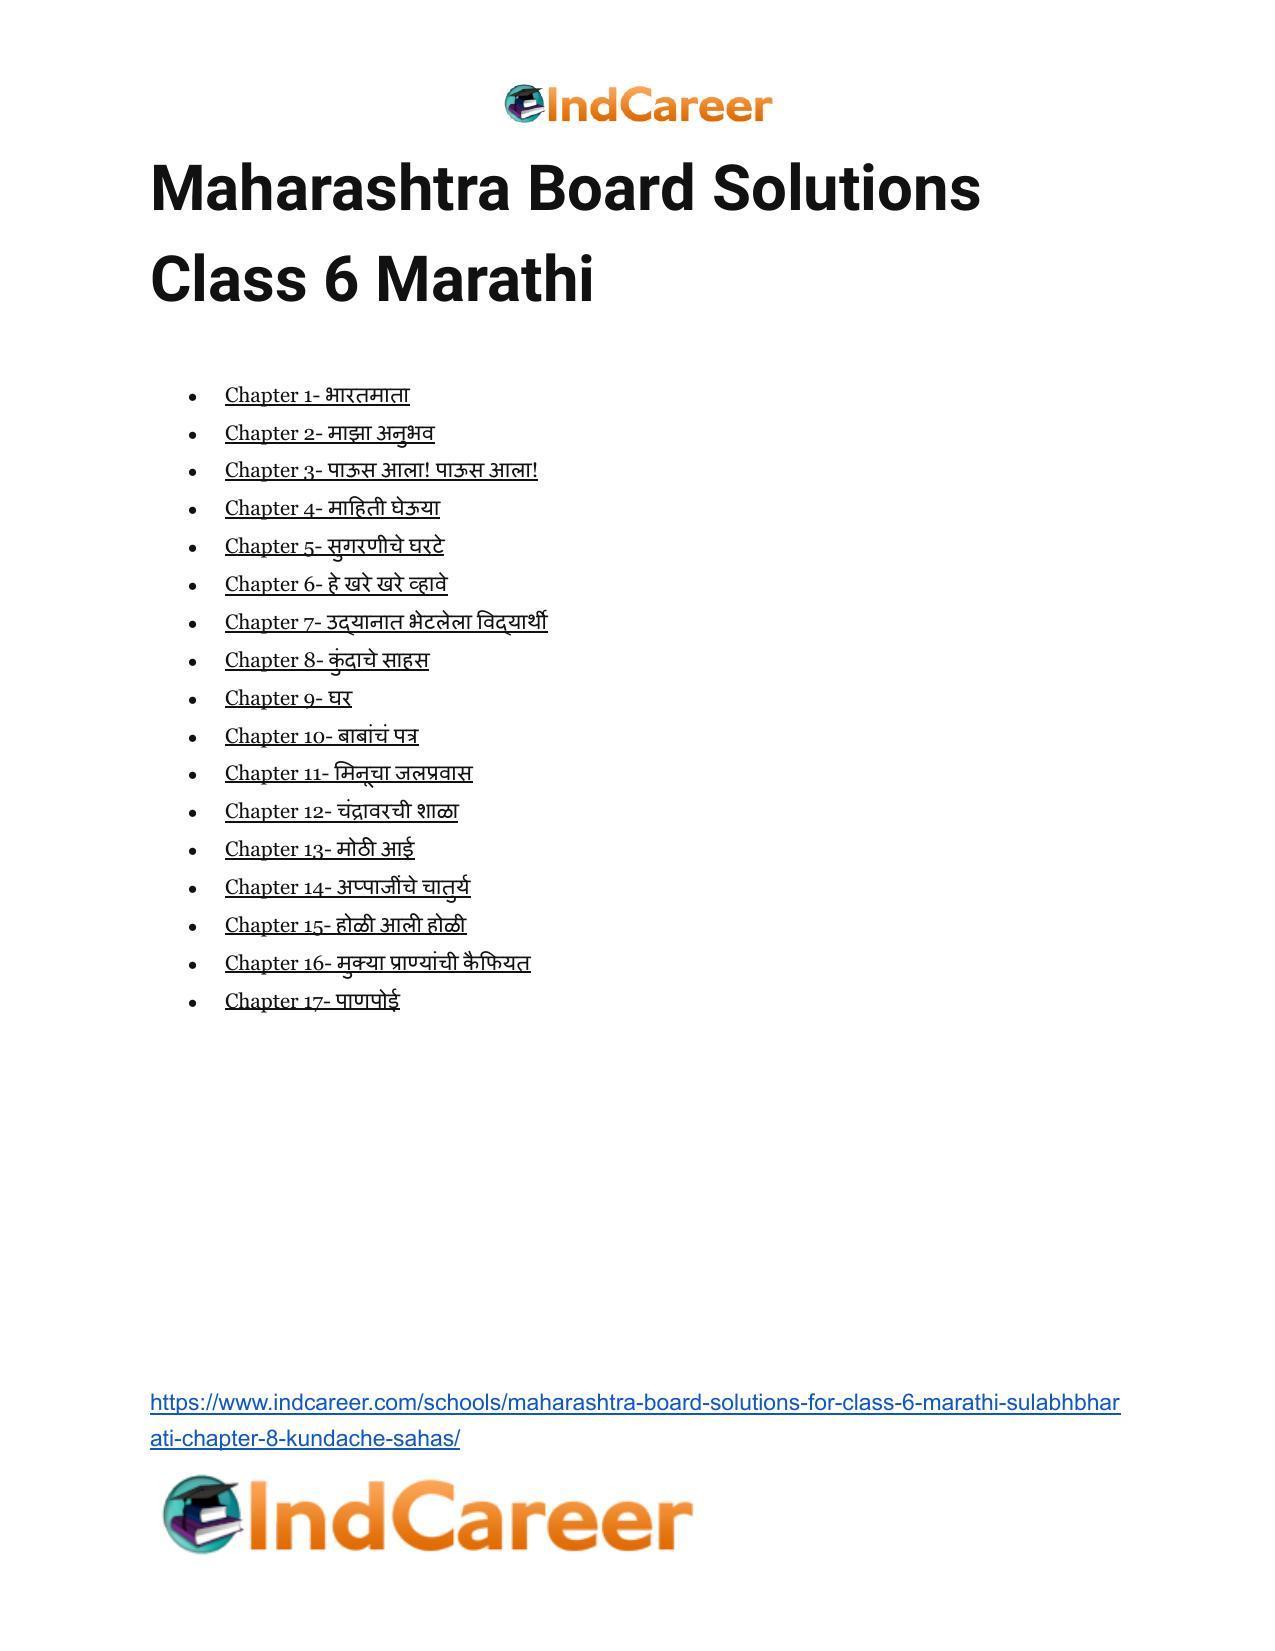 Maharashtra Board Solutions for Class 6- Marathi Sulabhbharati: Chapter 8- कुंदाचे साहस - Page 25